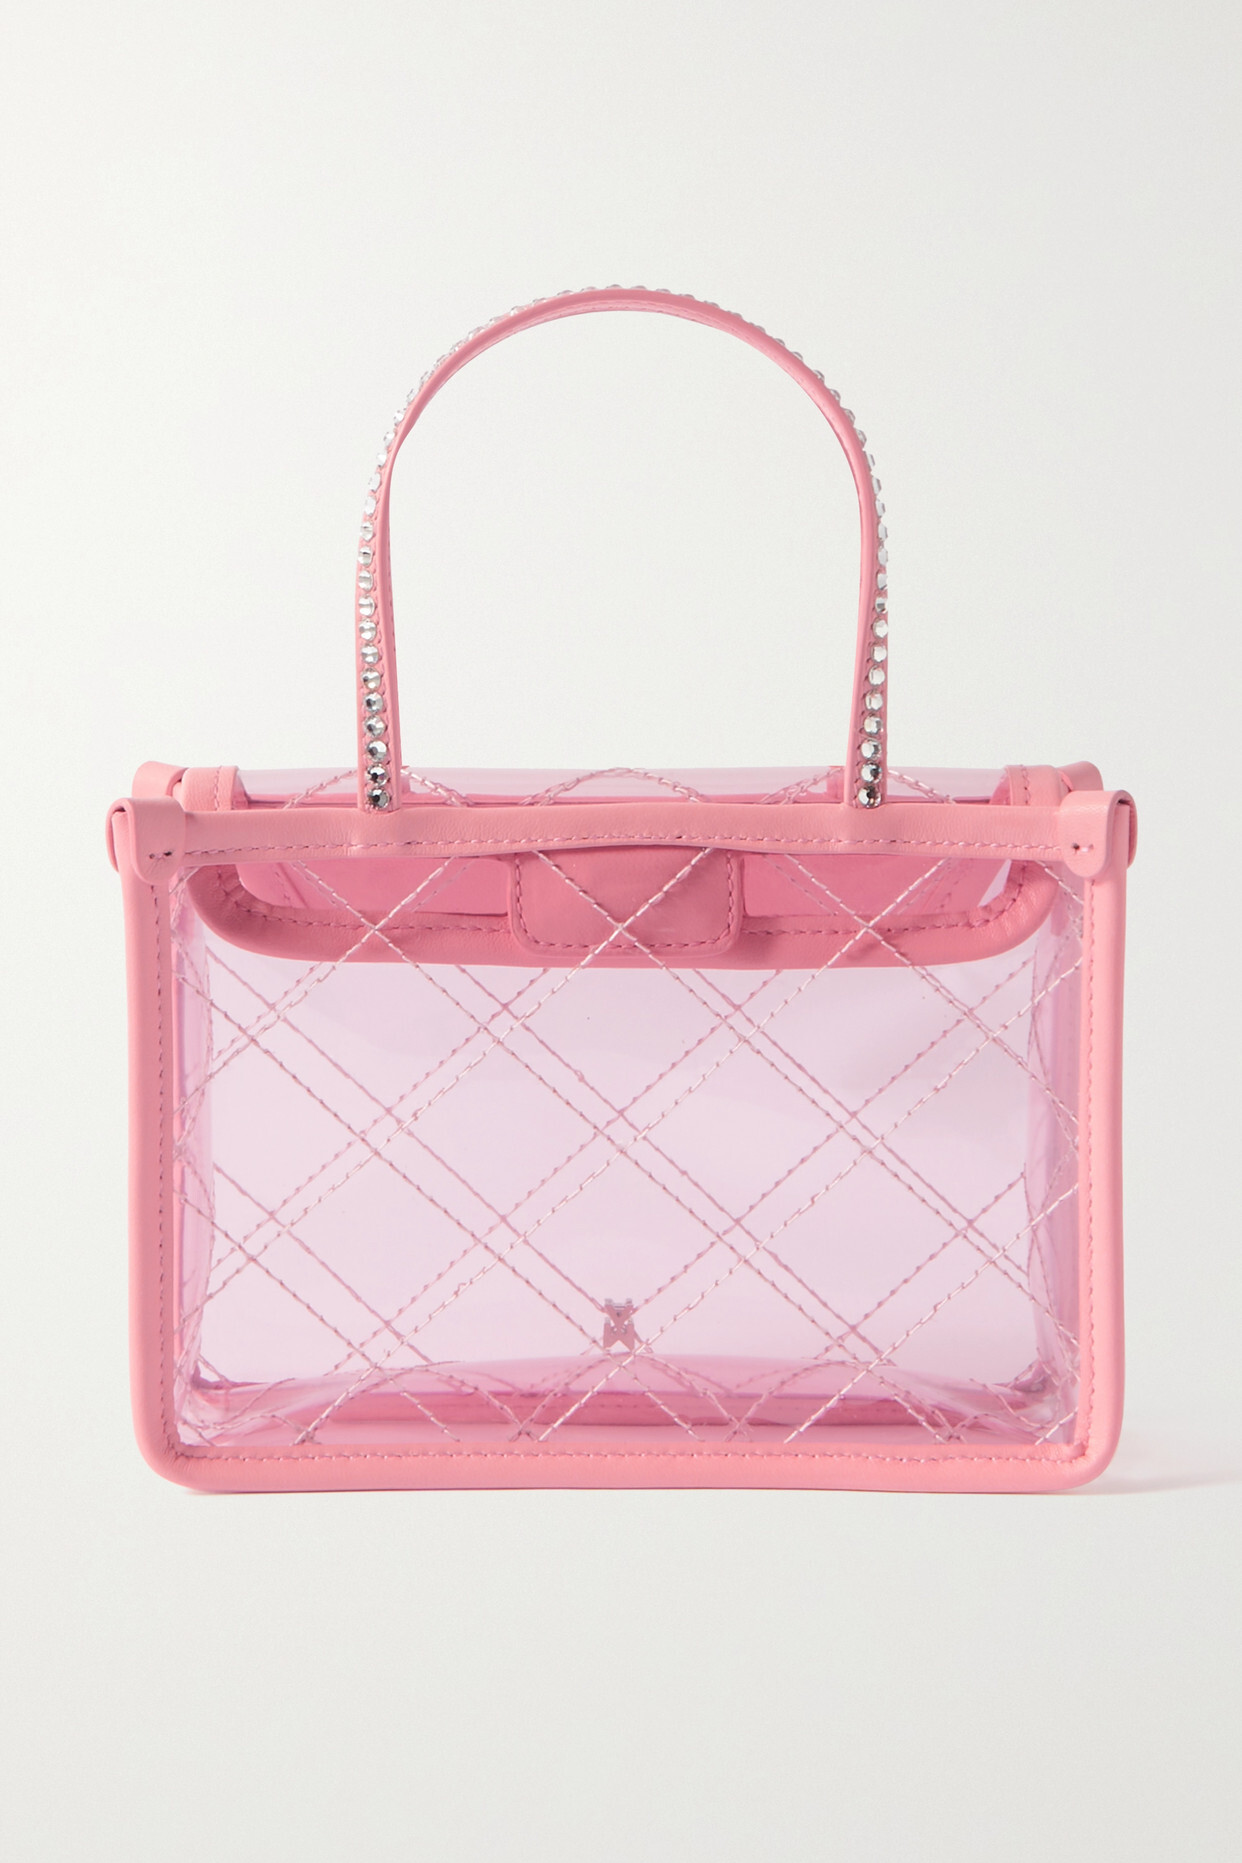 Amina Muaddi - Betty Mini Crystal-embellished Leather-trimmed Pvc Tote - Pink